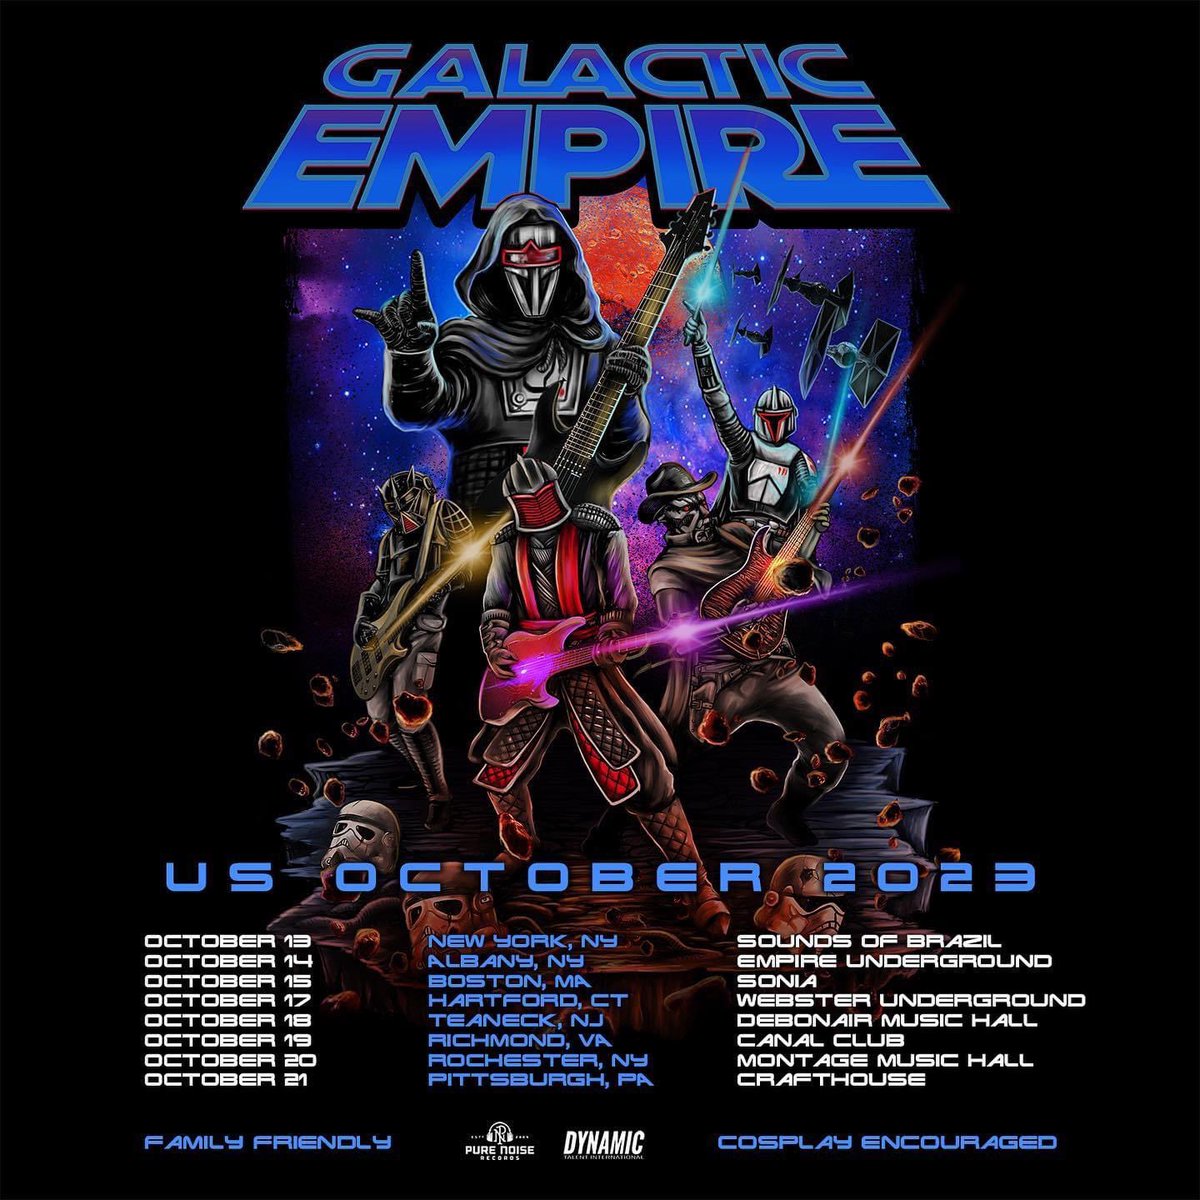 Tickets on sale now! galacticempireband.com @purenoiserecs #starwars #metal #band #tour #cosplay